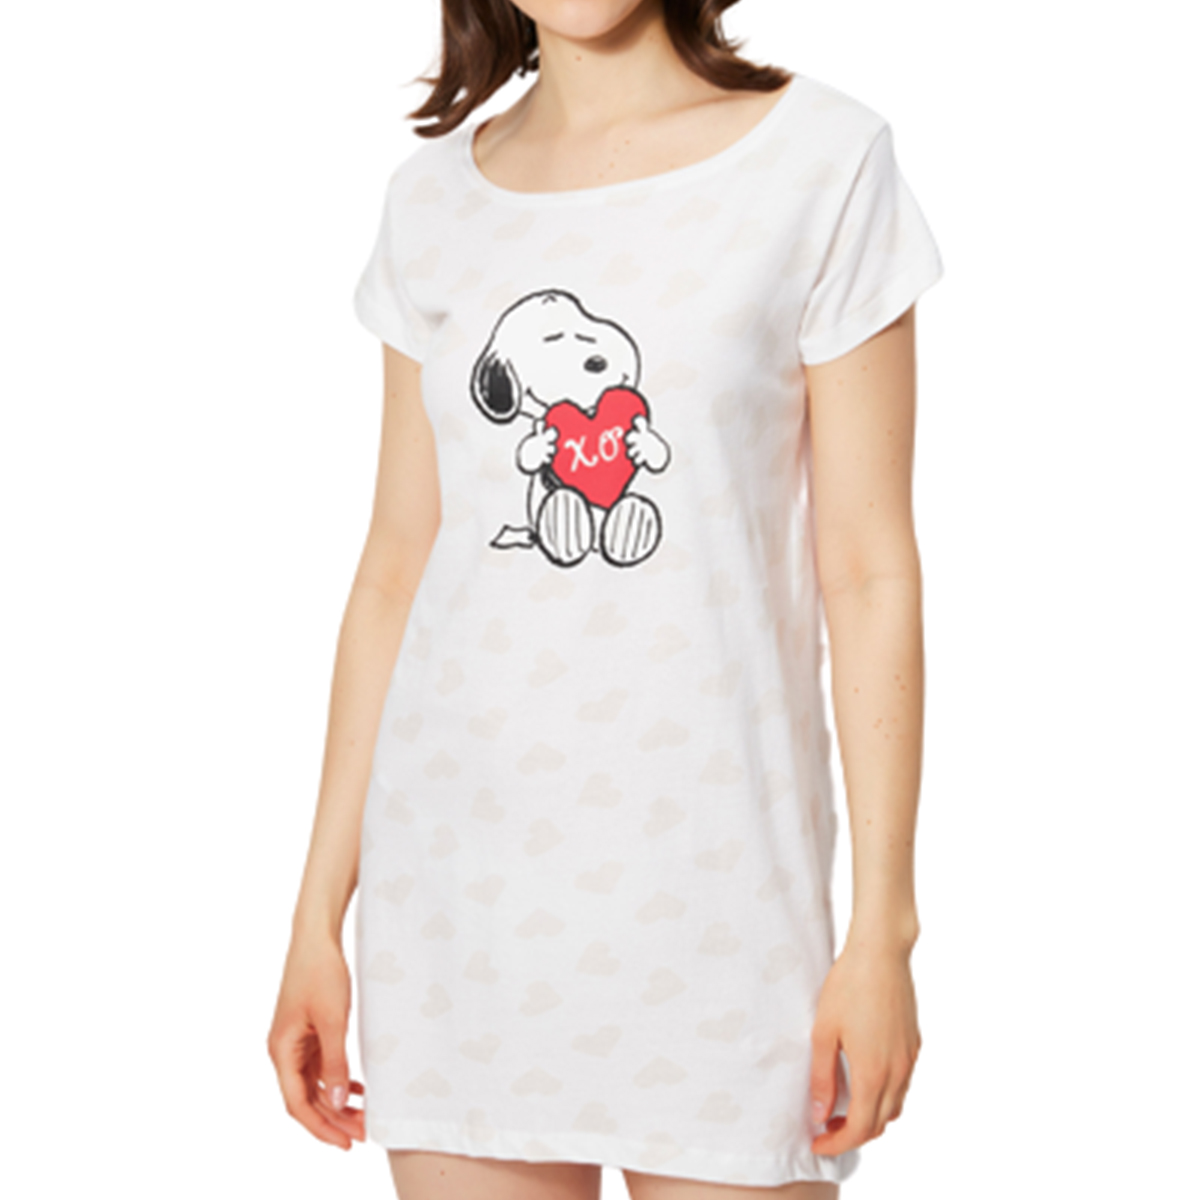 Snoopy T-shirt short sleeves Women